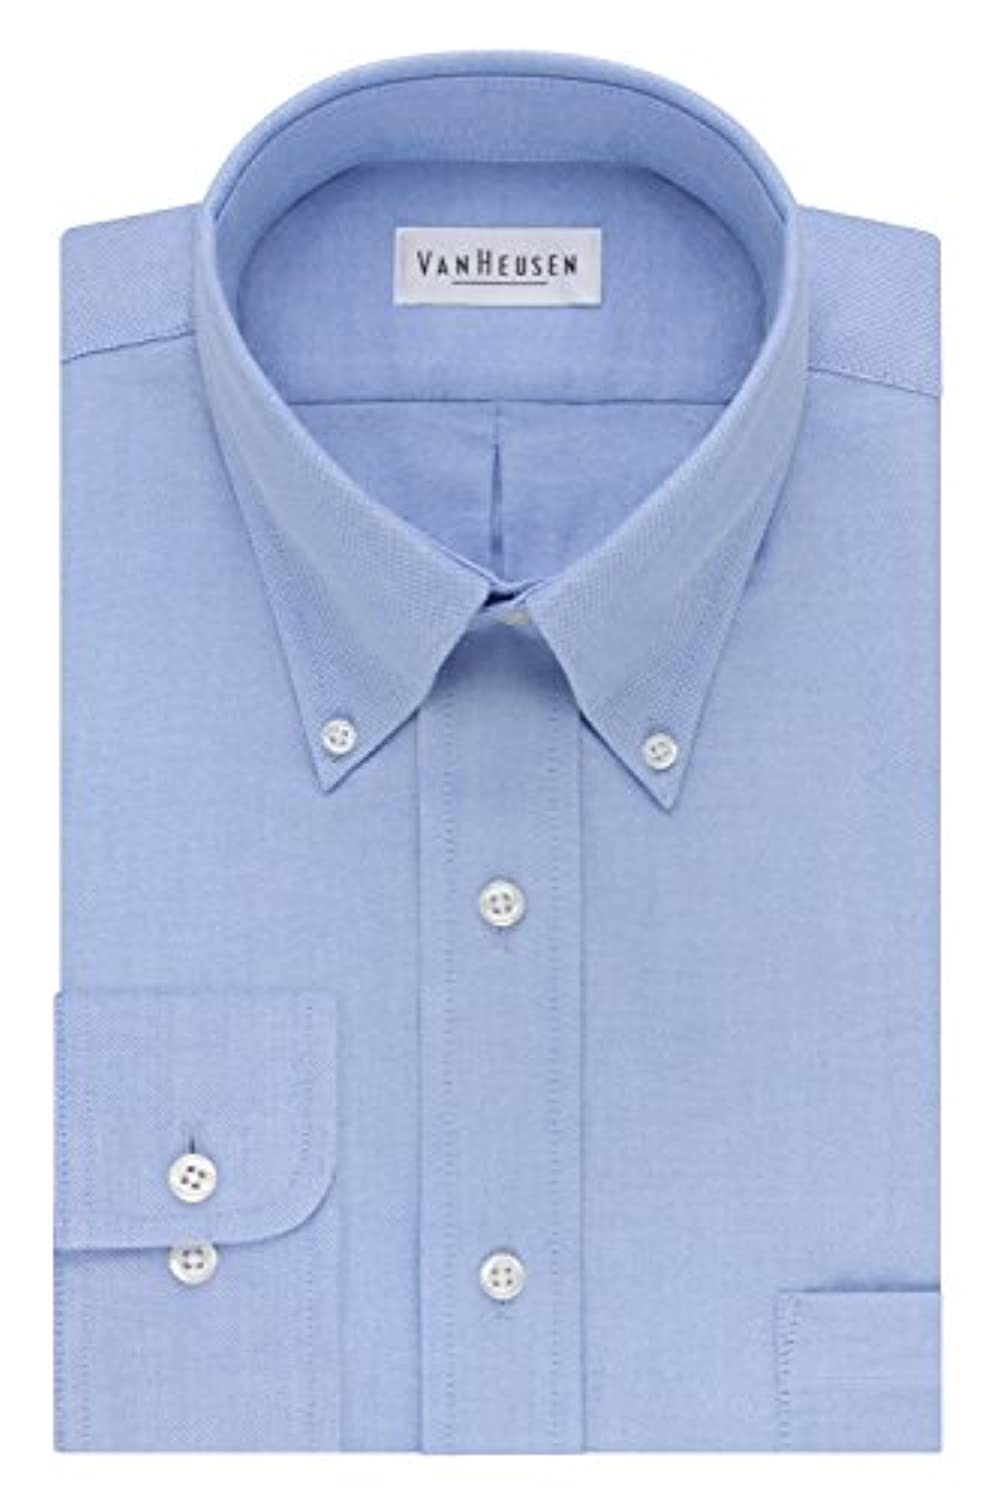 Van Heusen Men/'s Dress Shirt Regular Fit Oxford Solid